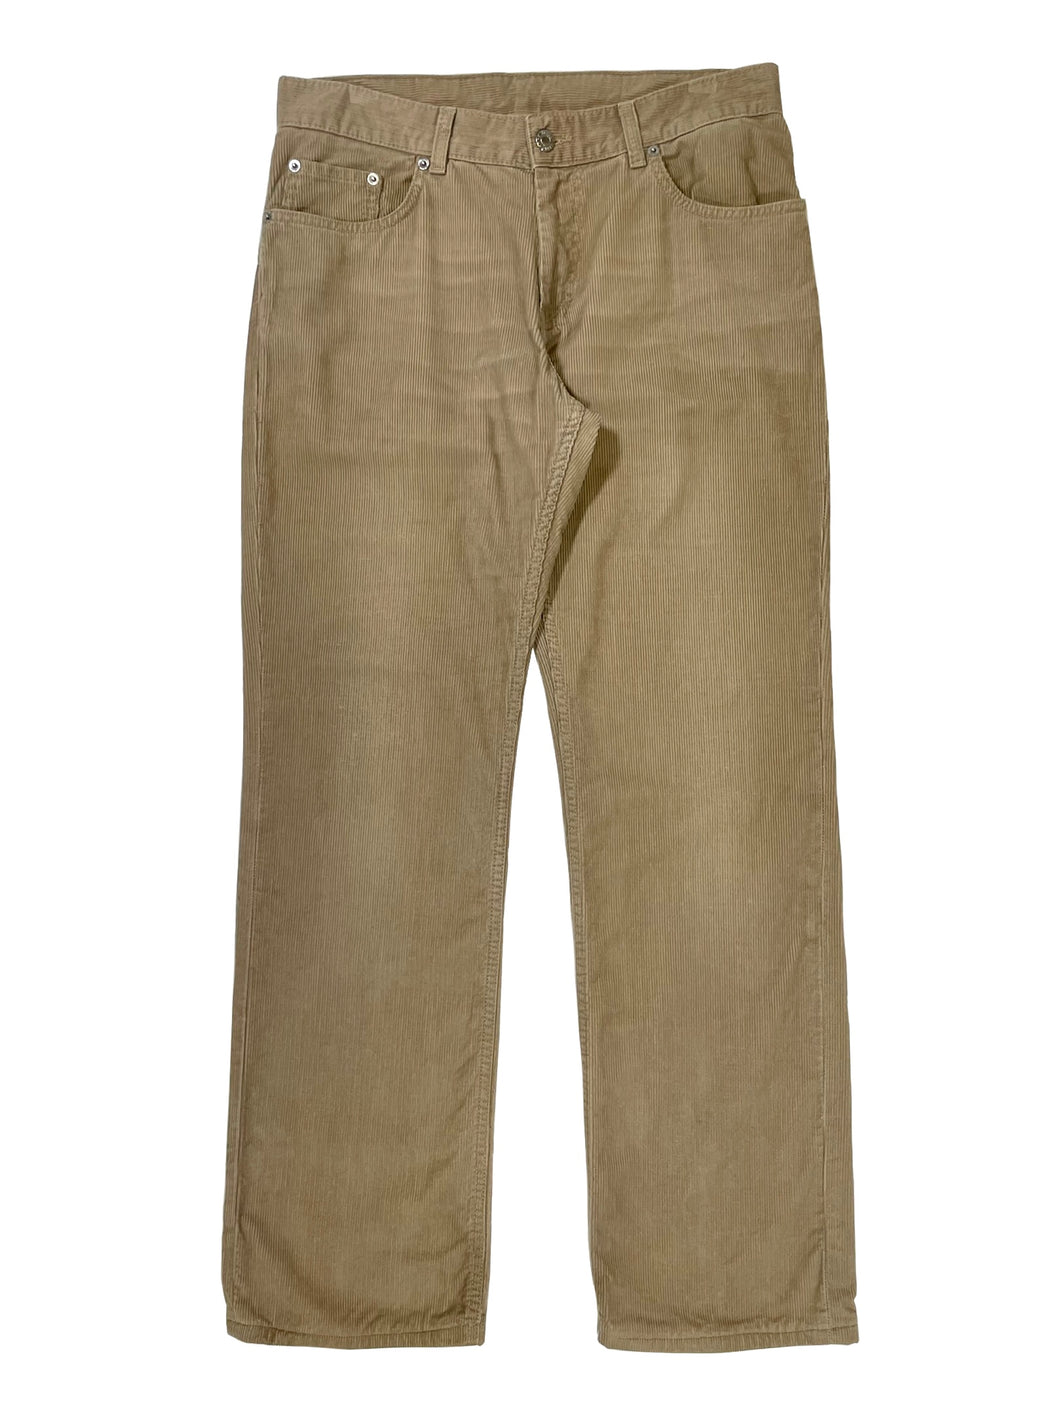 1990s Helmut Lang vintage corduroy pants